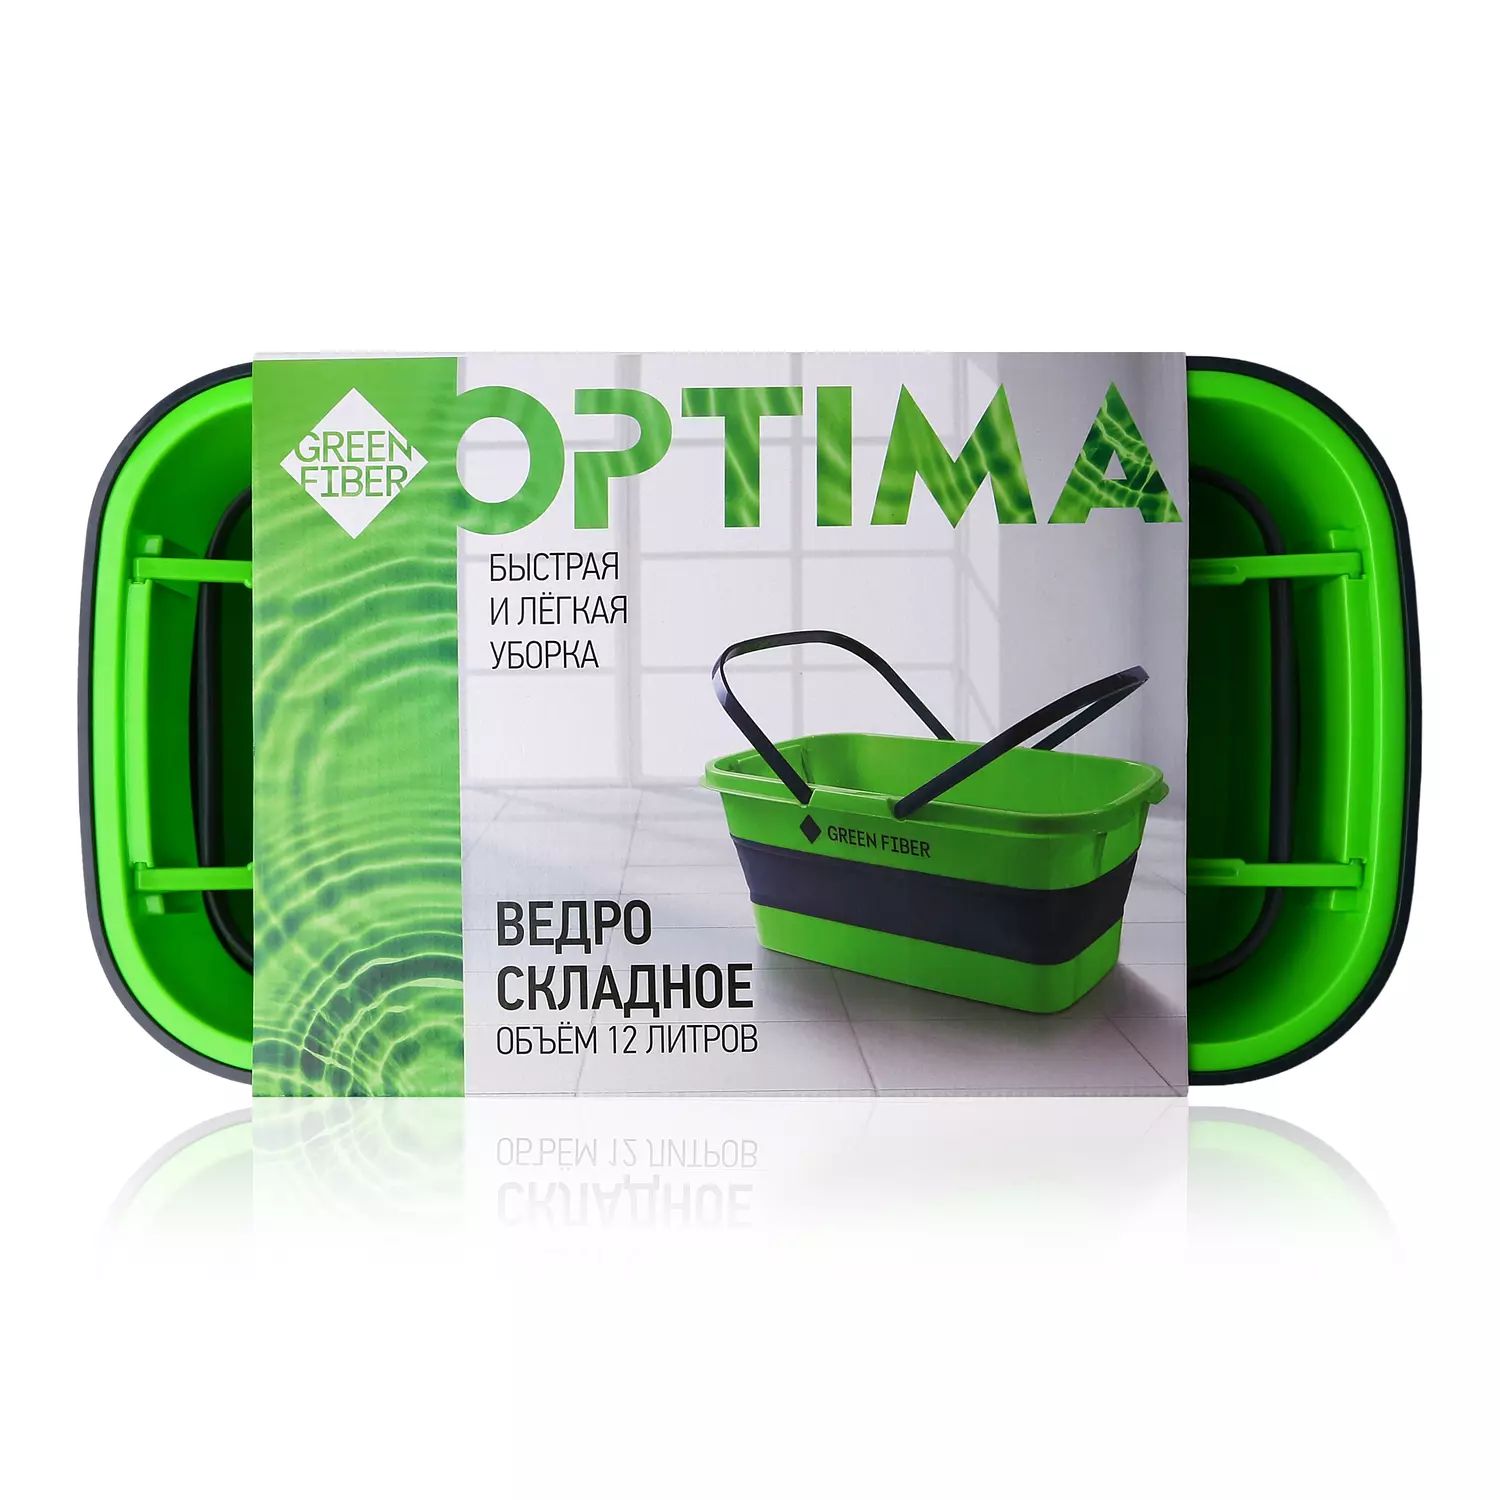 Green Fiber OPTIMA Folding Bucket || جردل قابل للطي hover image